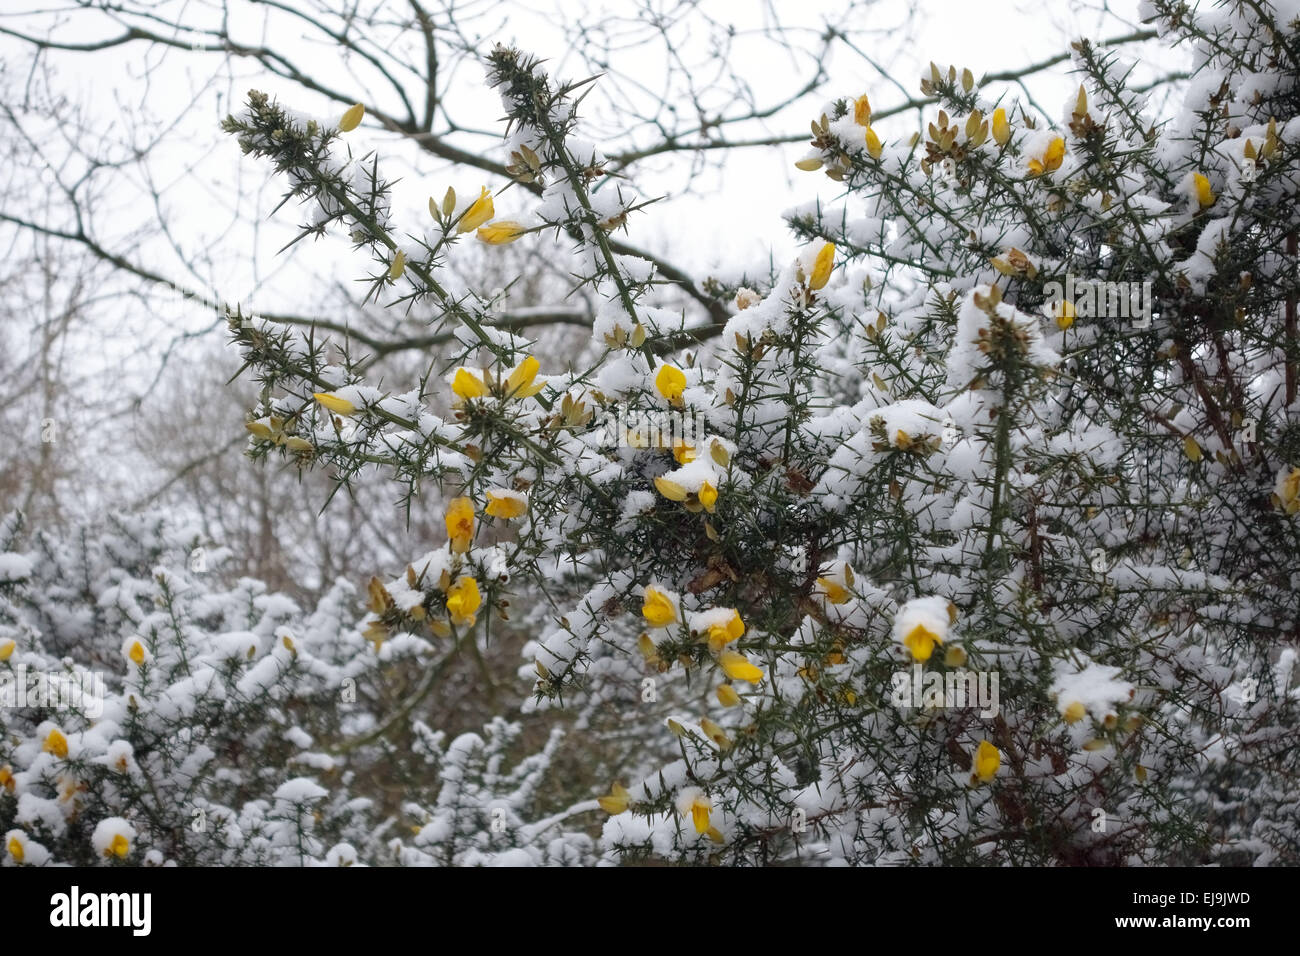 Freshly fallen snow on a gorse bush, Ullex europeaus, in flower in winter, Berkshire, February Stock Photo